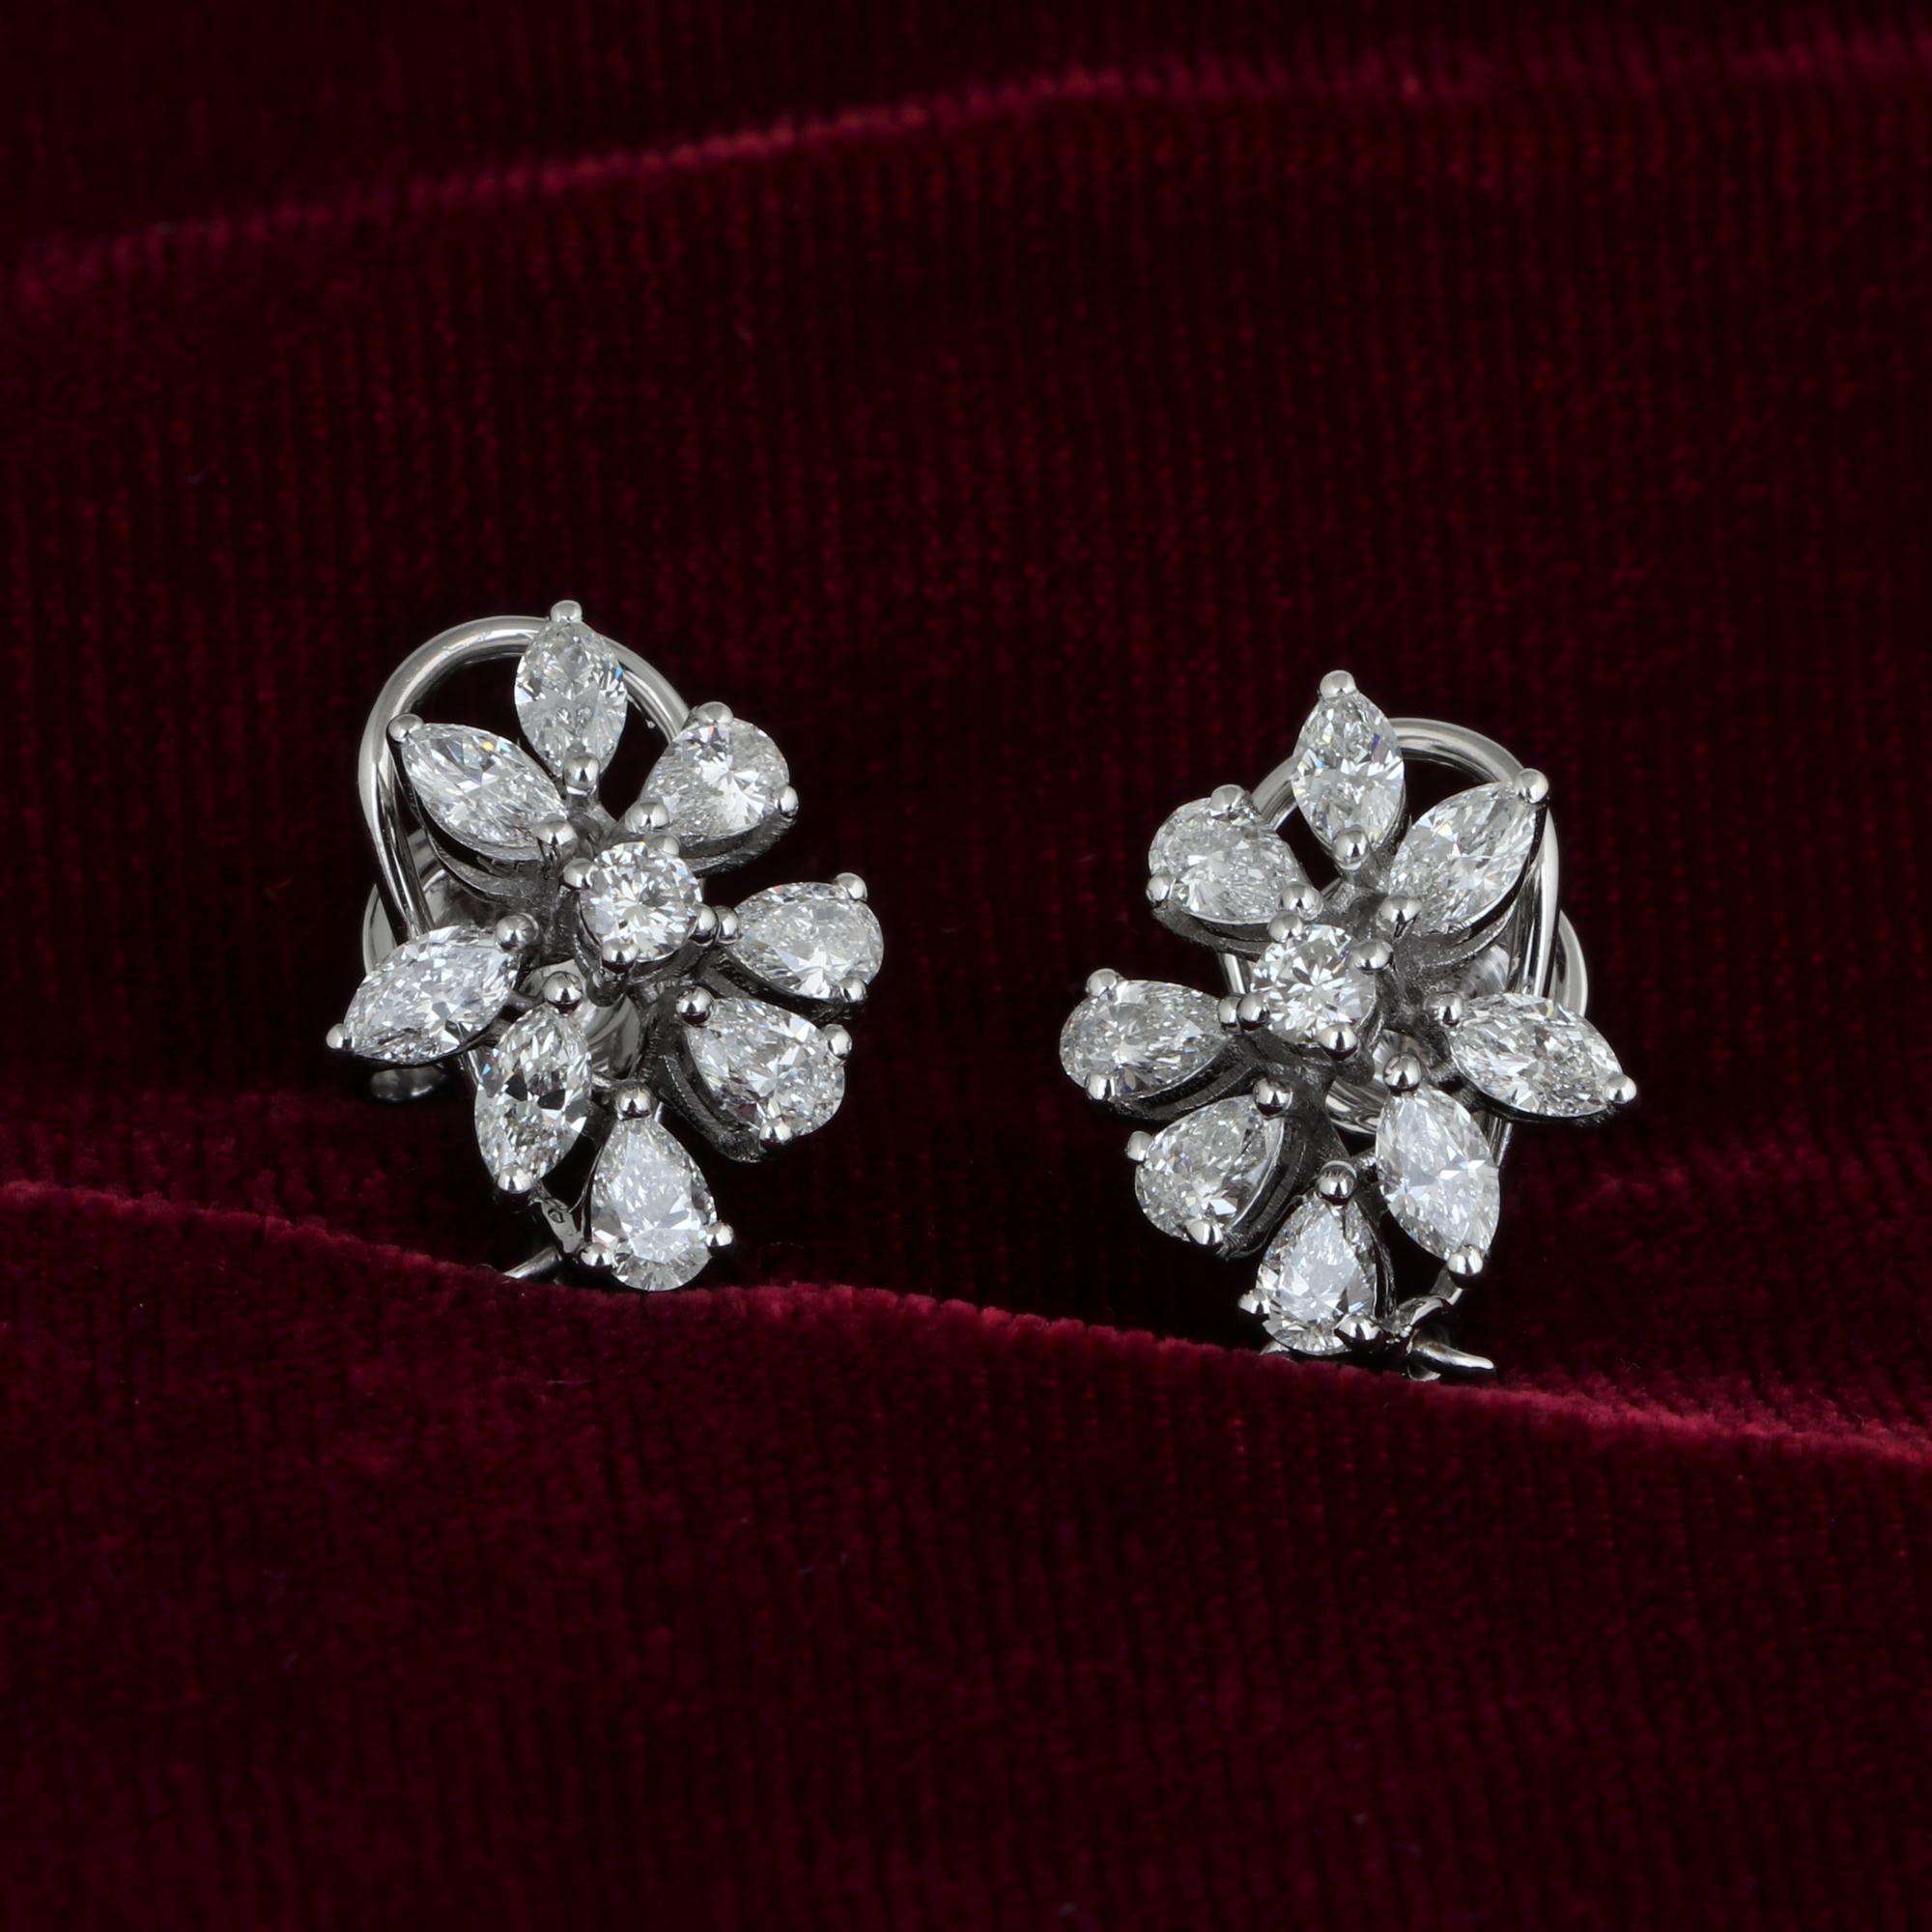 1.7 carat diamond earrings